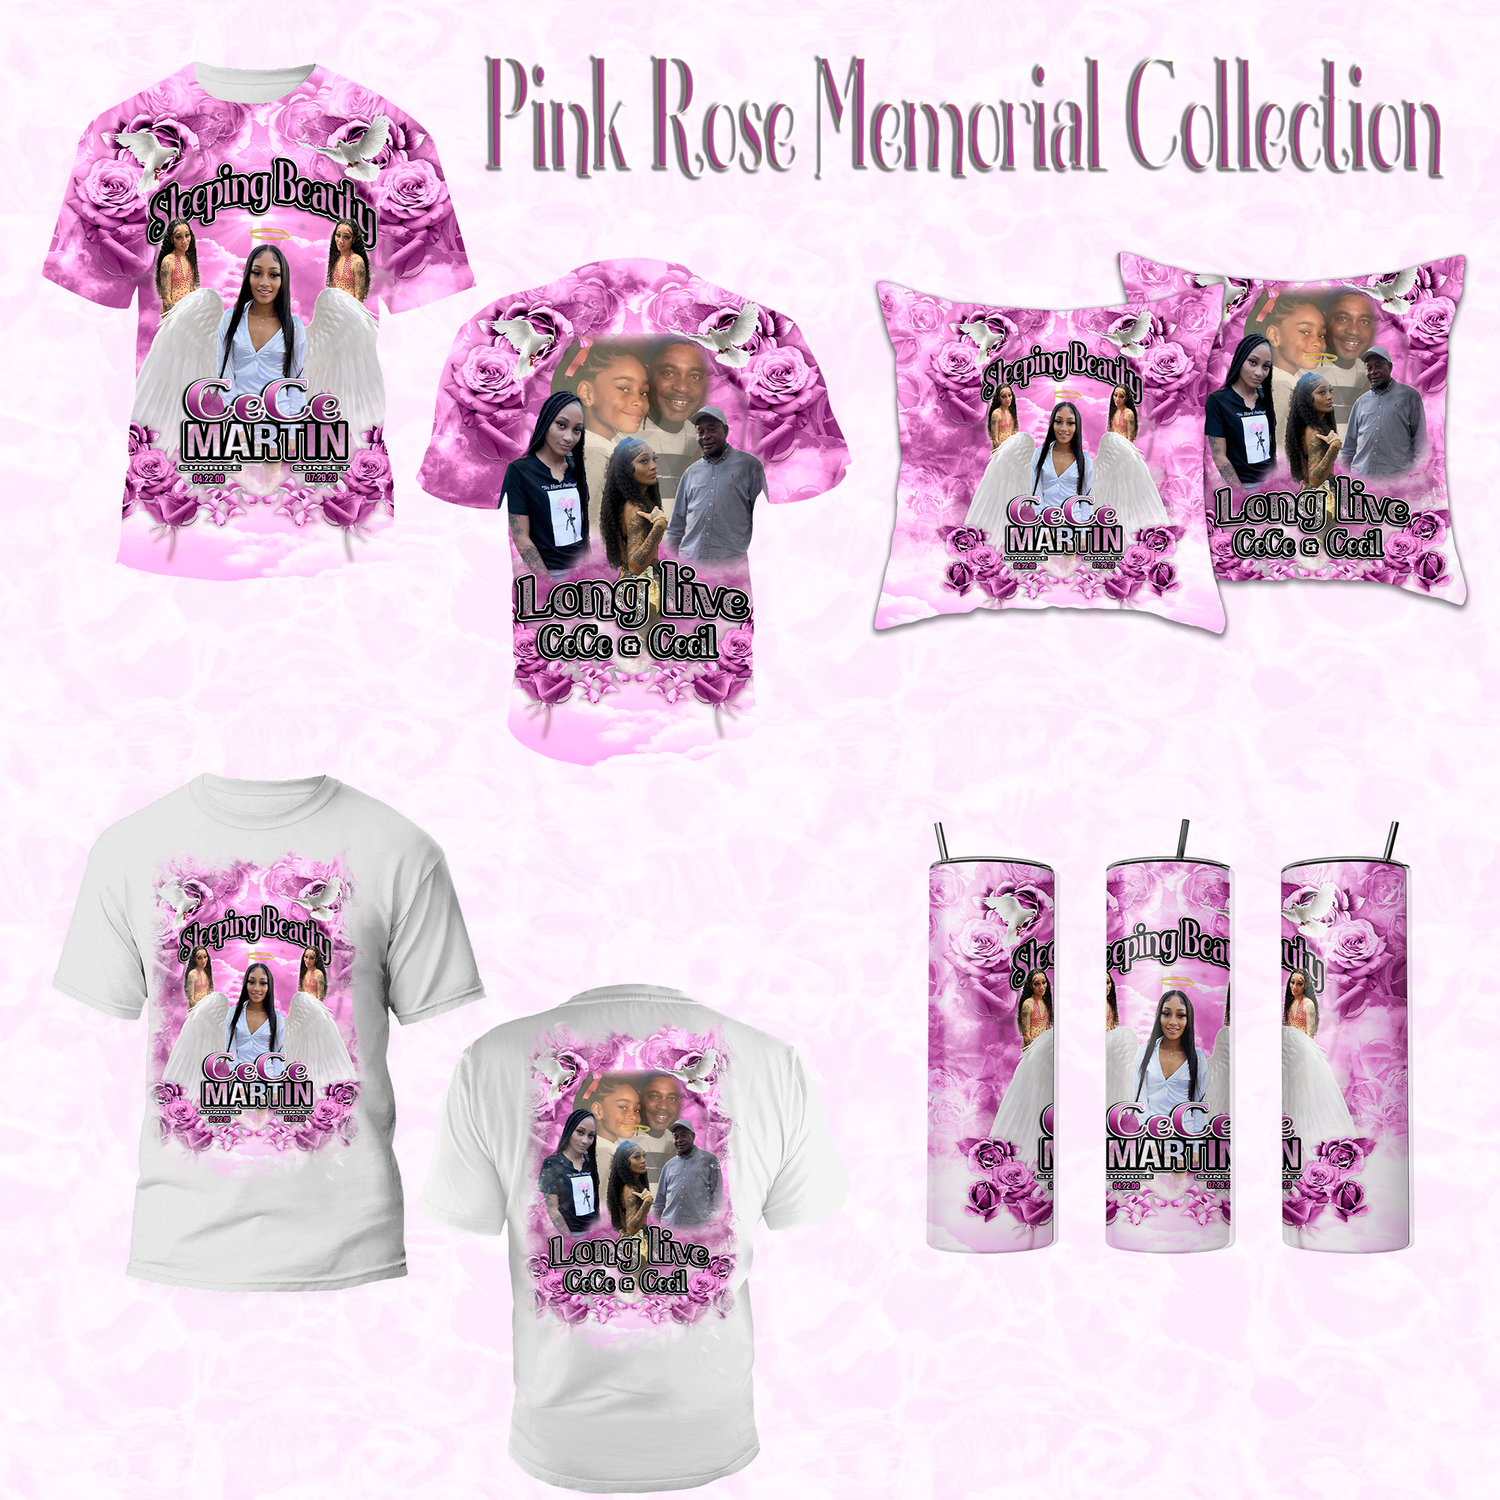 FKK Rose Memorial Collection